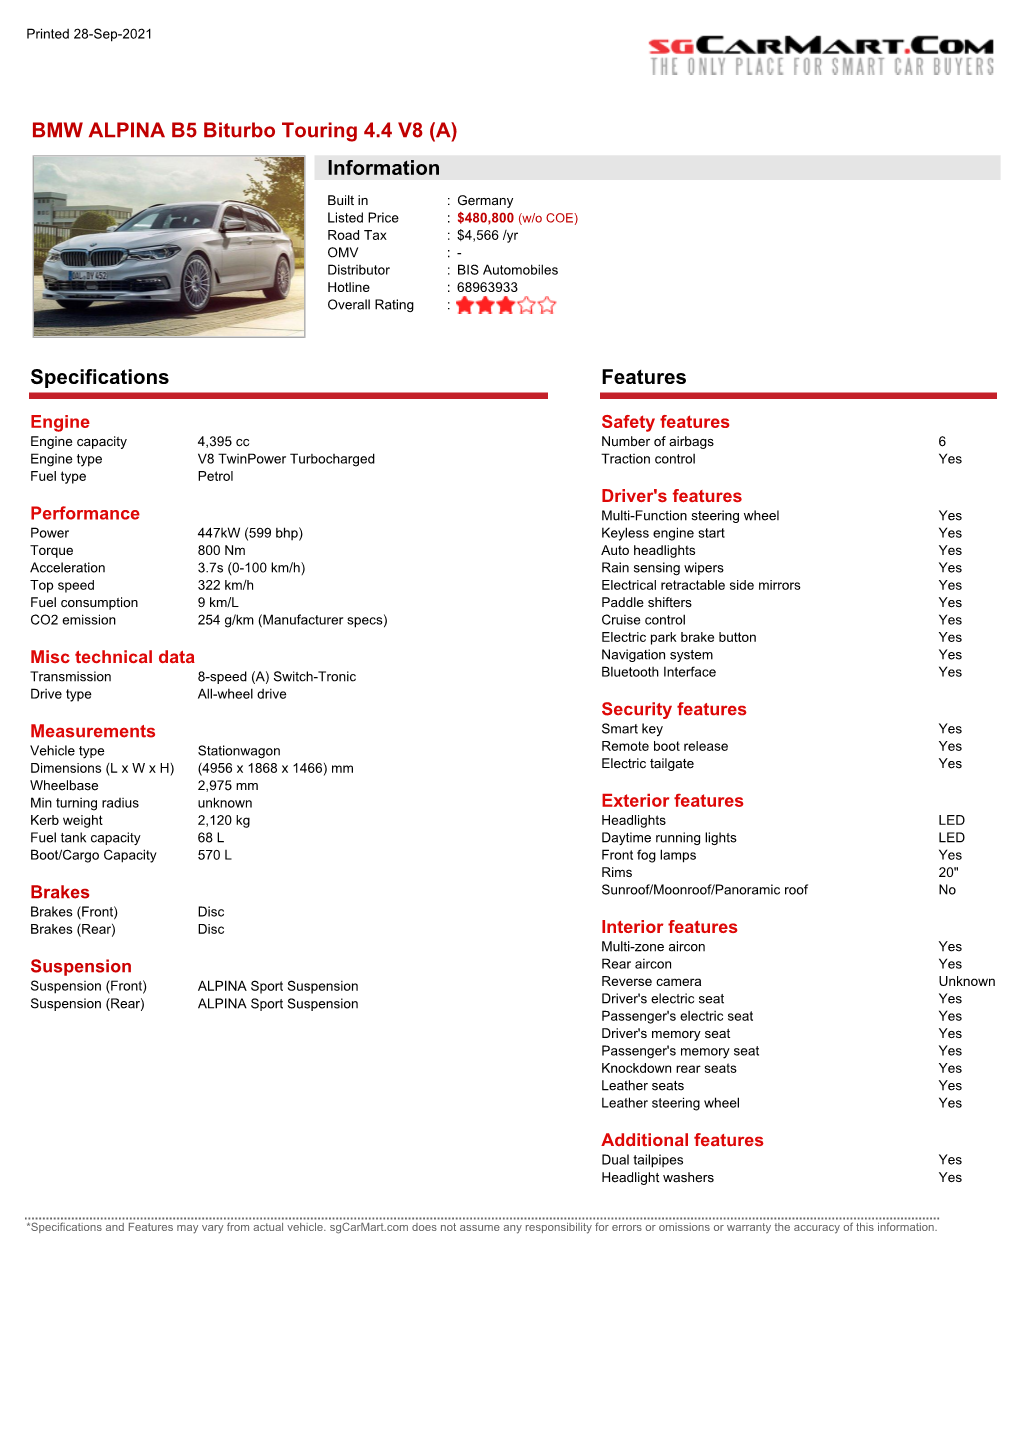 BMW ALPINA B5 Biturbo Touring 4.4 V8 (A) Information